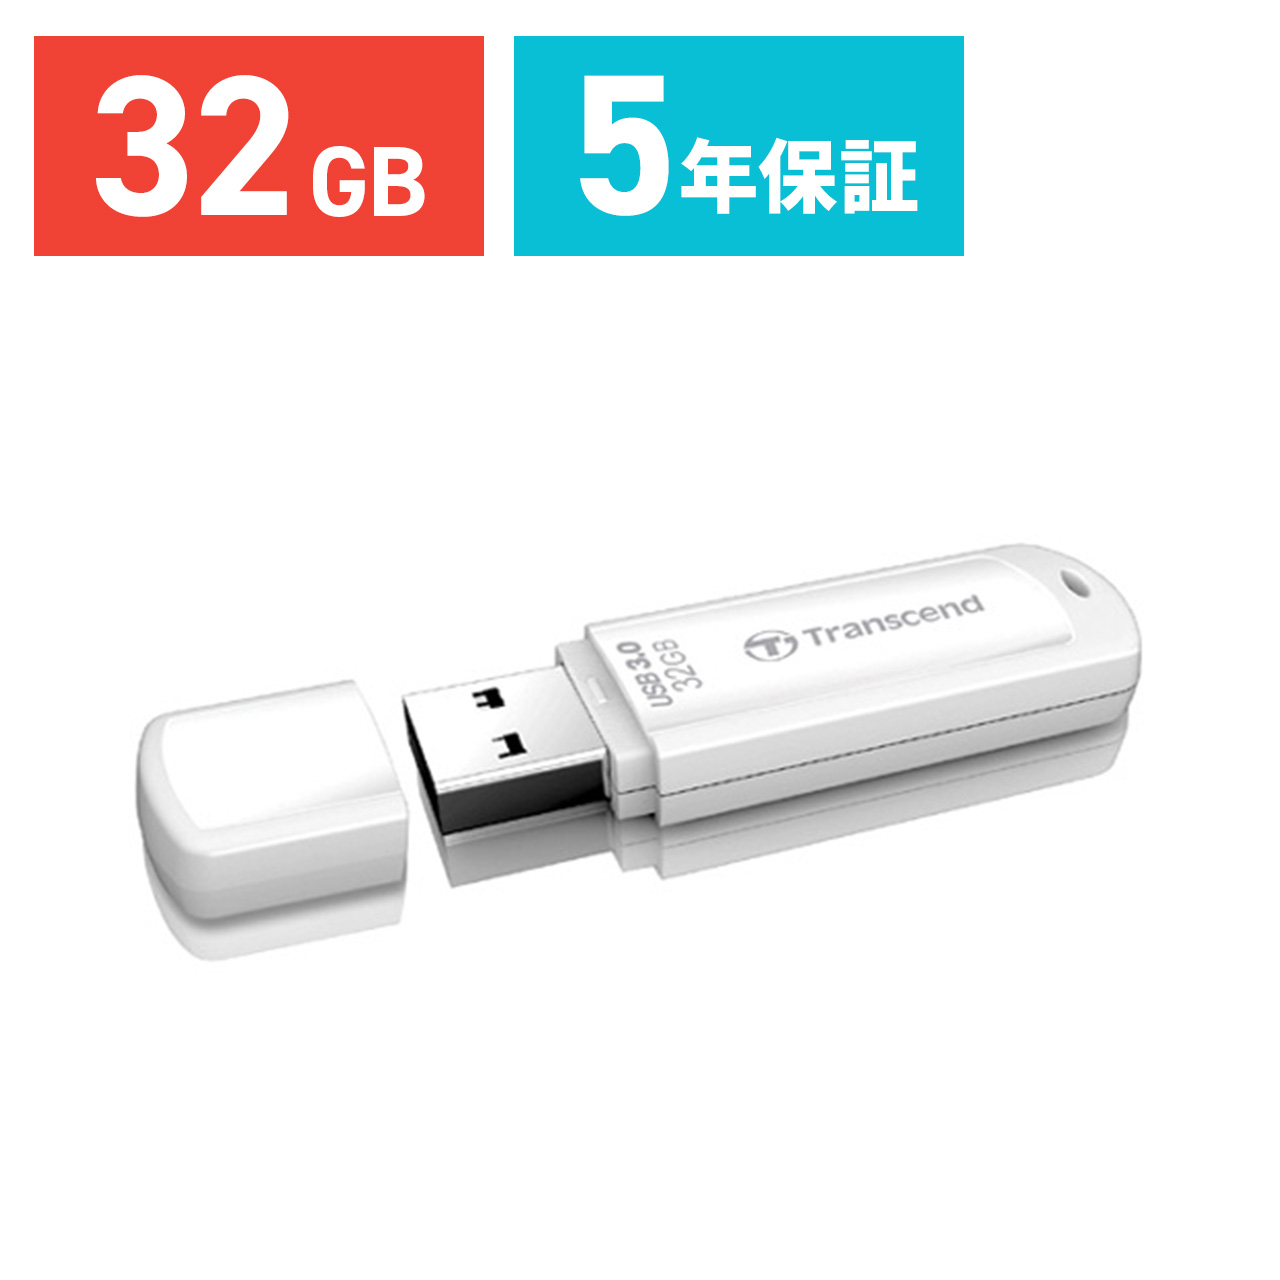 TS32GJF730 ネコポス専用 サービス 送料無料対象品 Transcend USBメモリ 32GB USB3.0 JetFlash730 USBメモリー 高速 入学 大容量 卒業 今だけ限定15%OFFクーポン発行中 おしゃれ 光沢ホワイトボディ